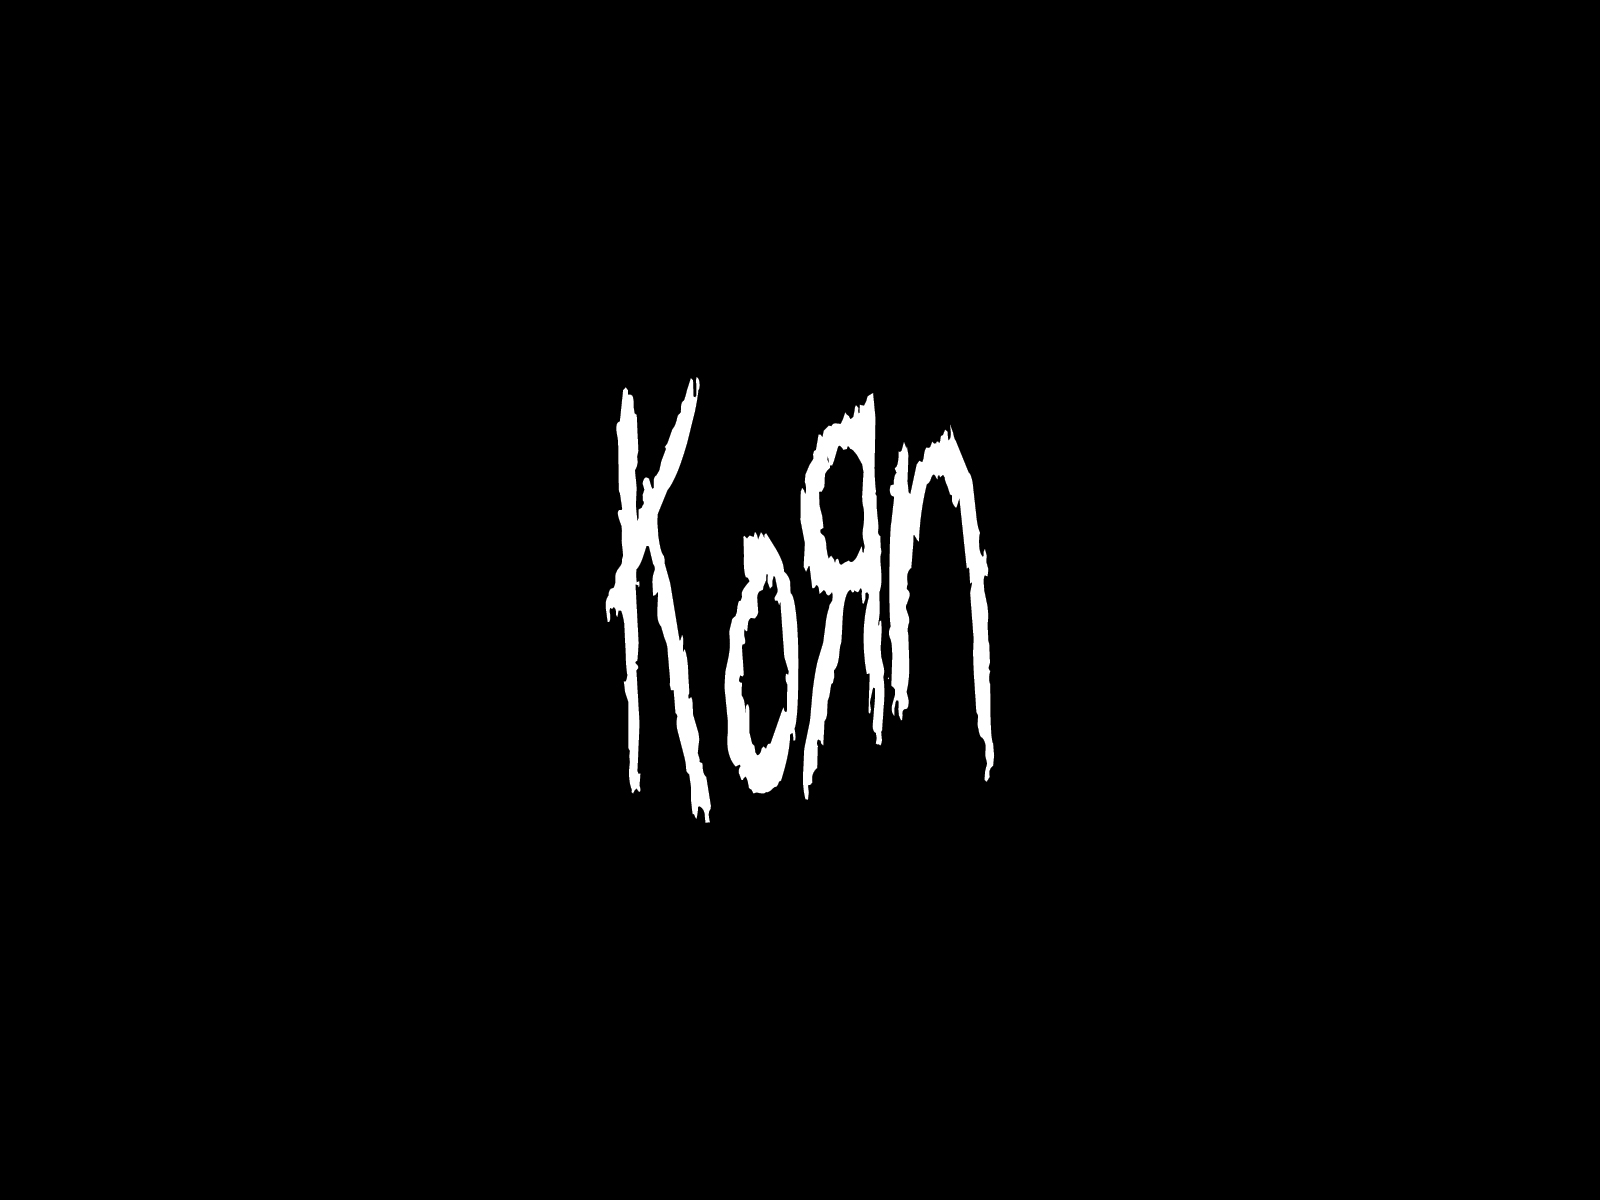 Korn logo and wallpaper | Band logos - Rock band logos, metal ...